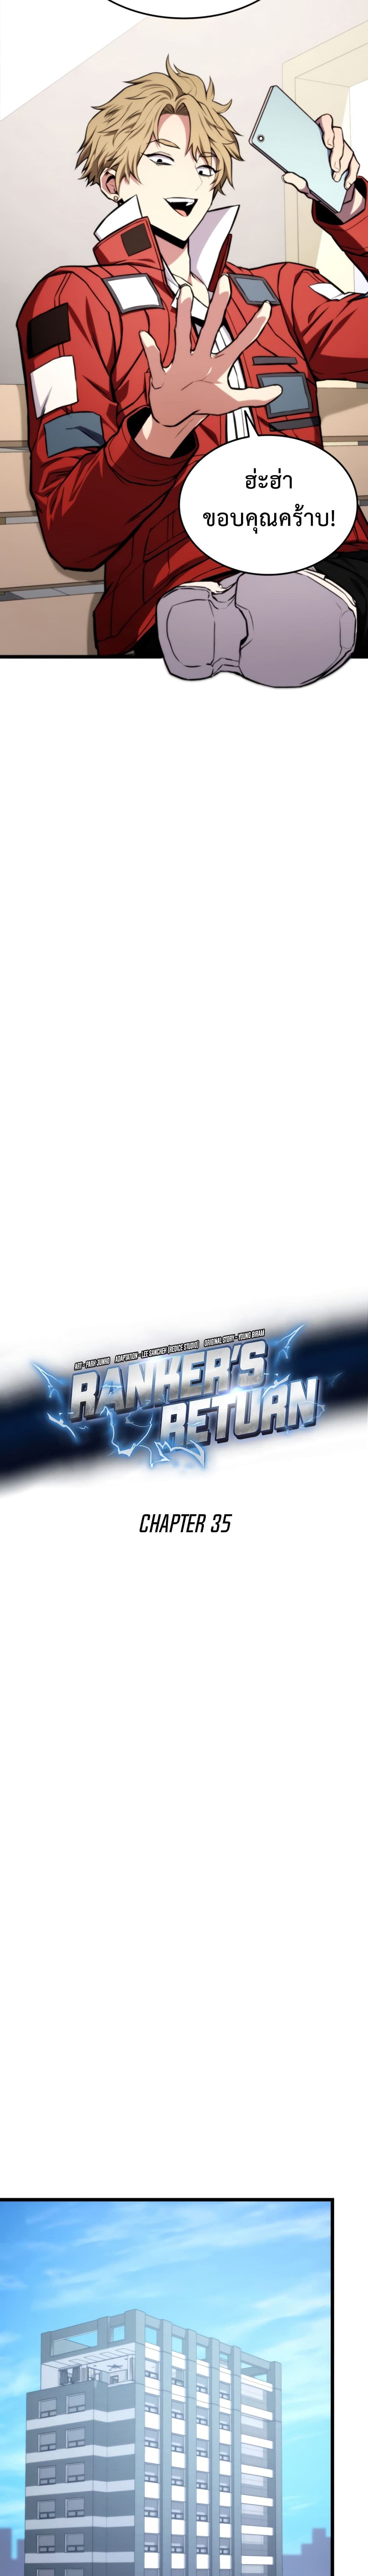 Ranker’s Return (Remake) 35 13